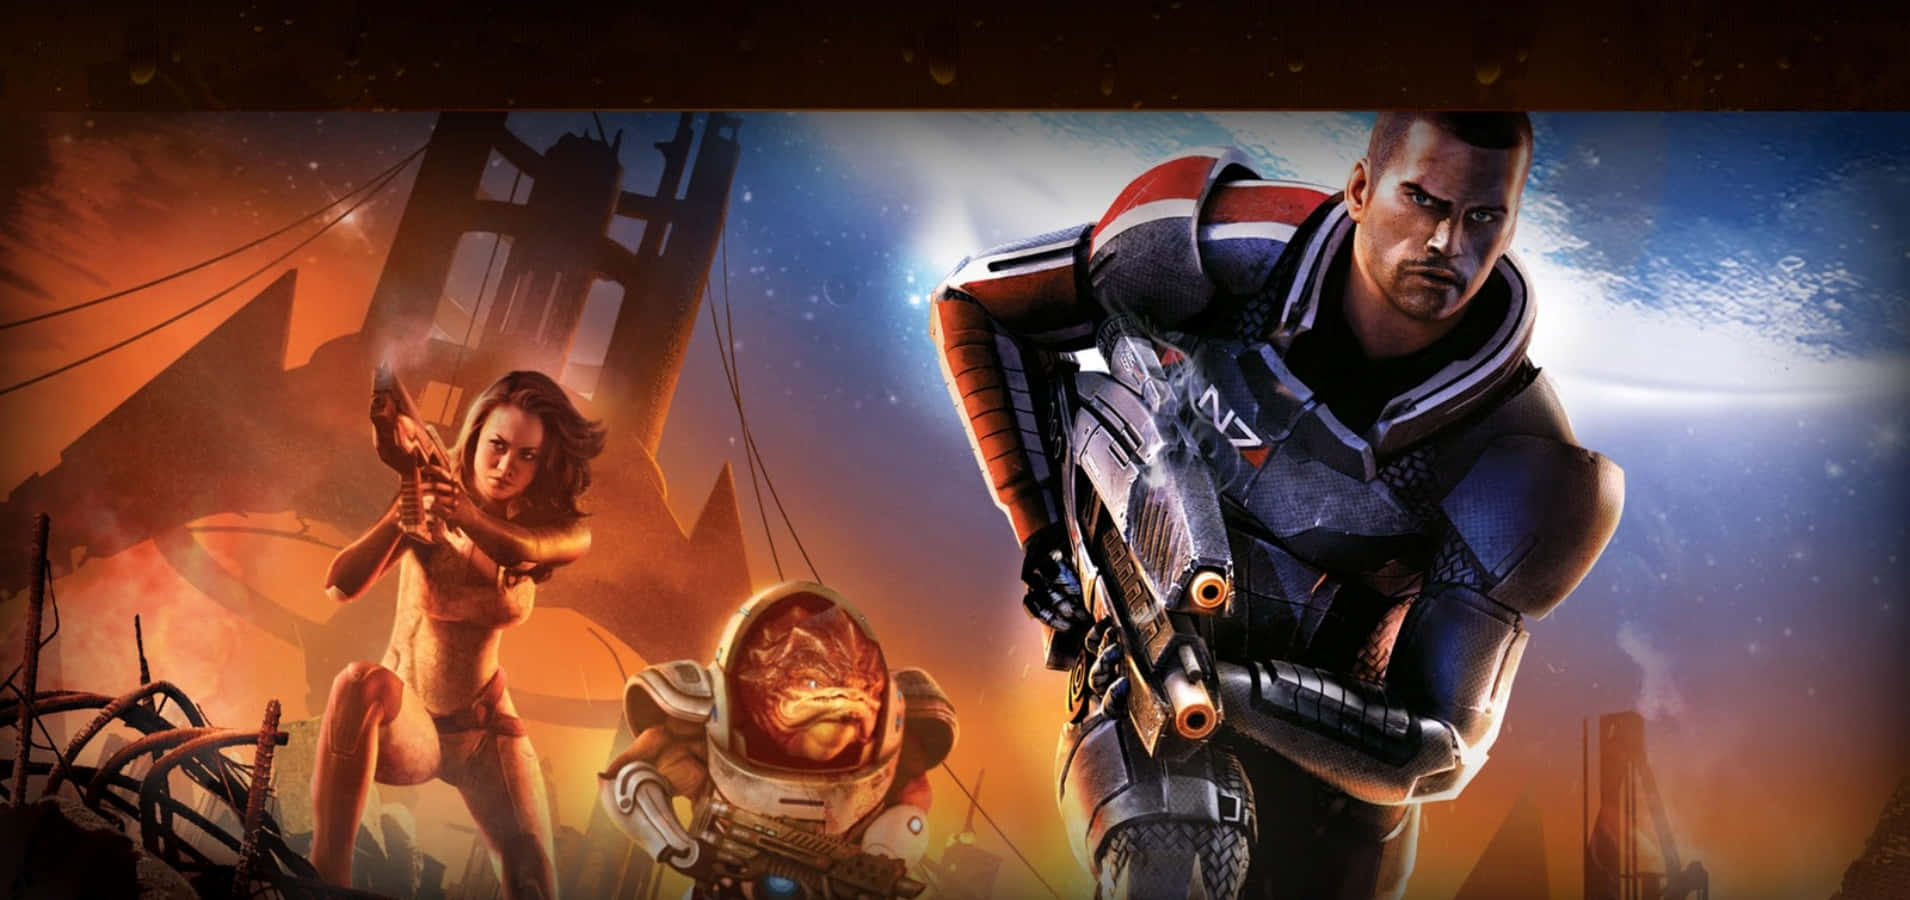 Héroesépicos Se Reunieron En El Universo De Mass Effect. Fondo de pantalla